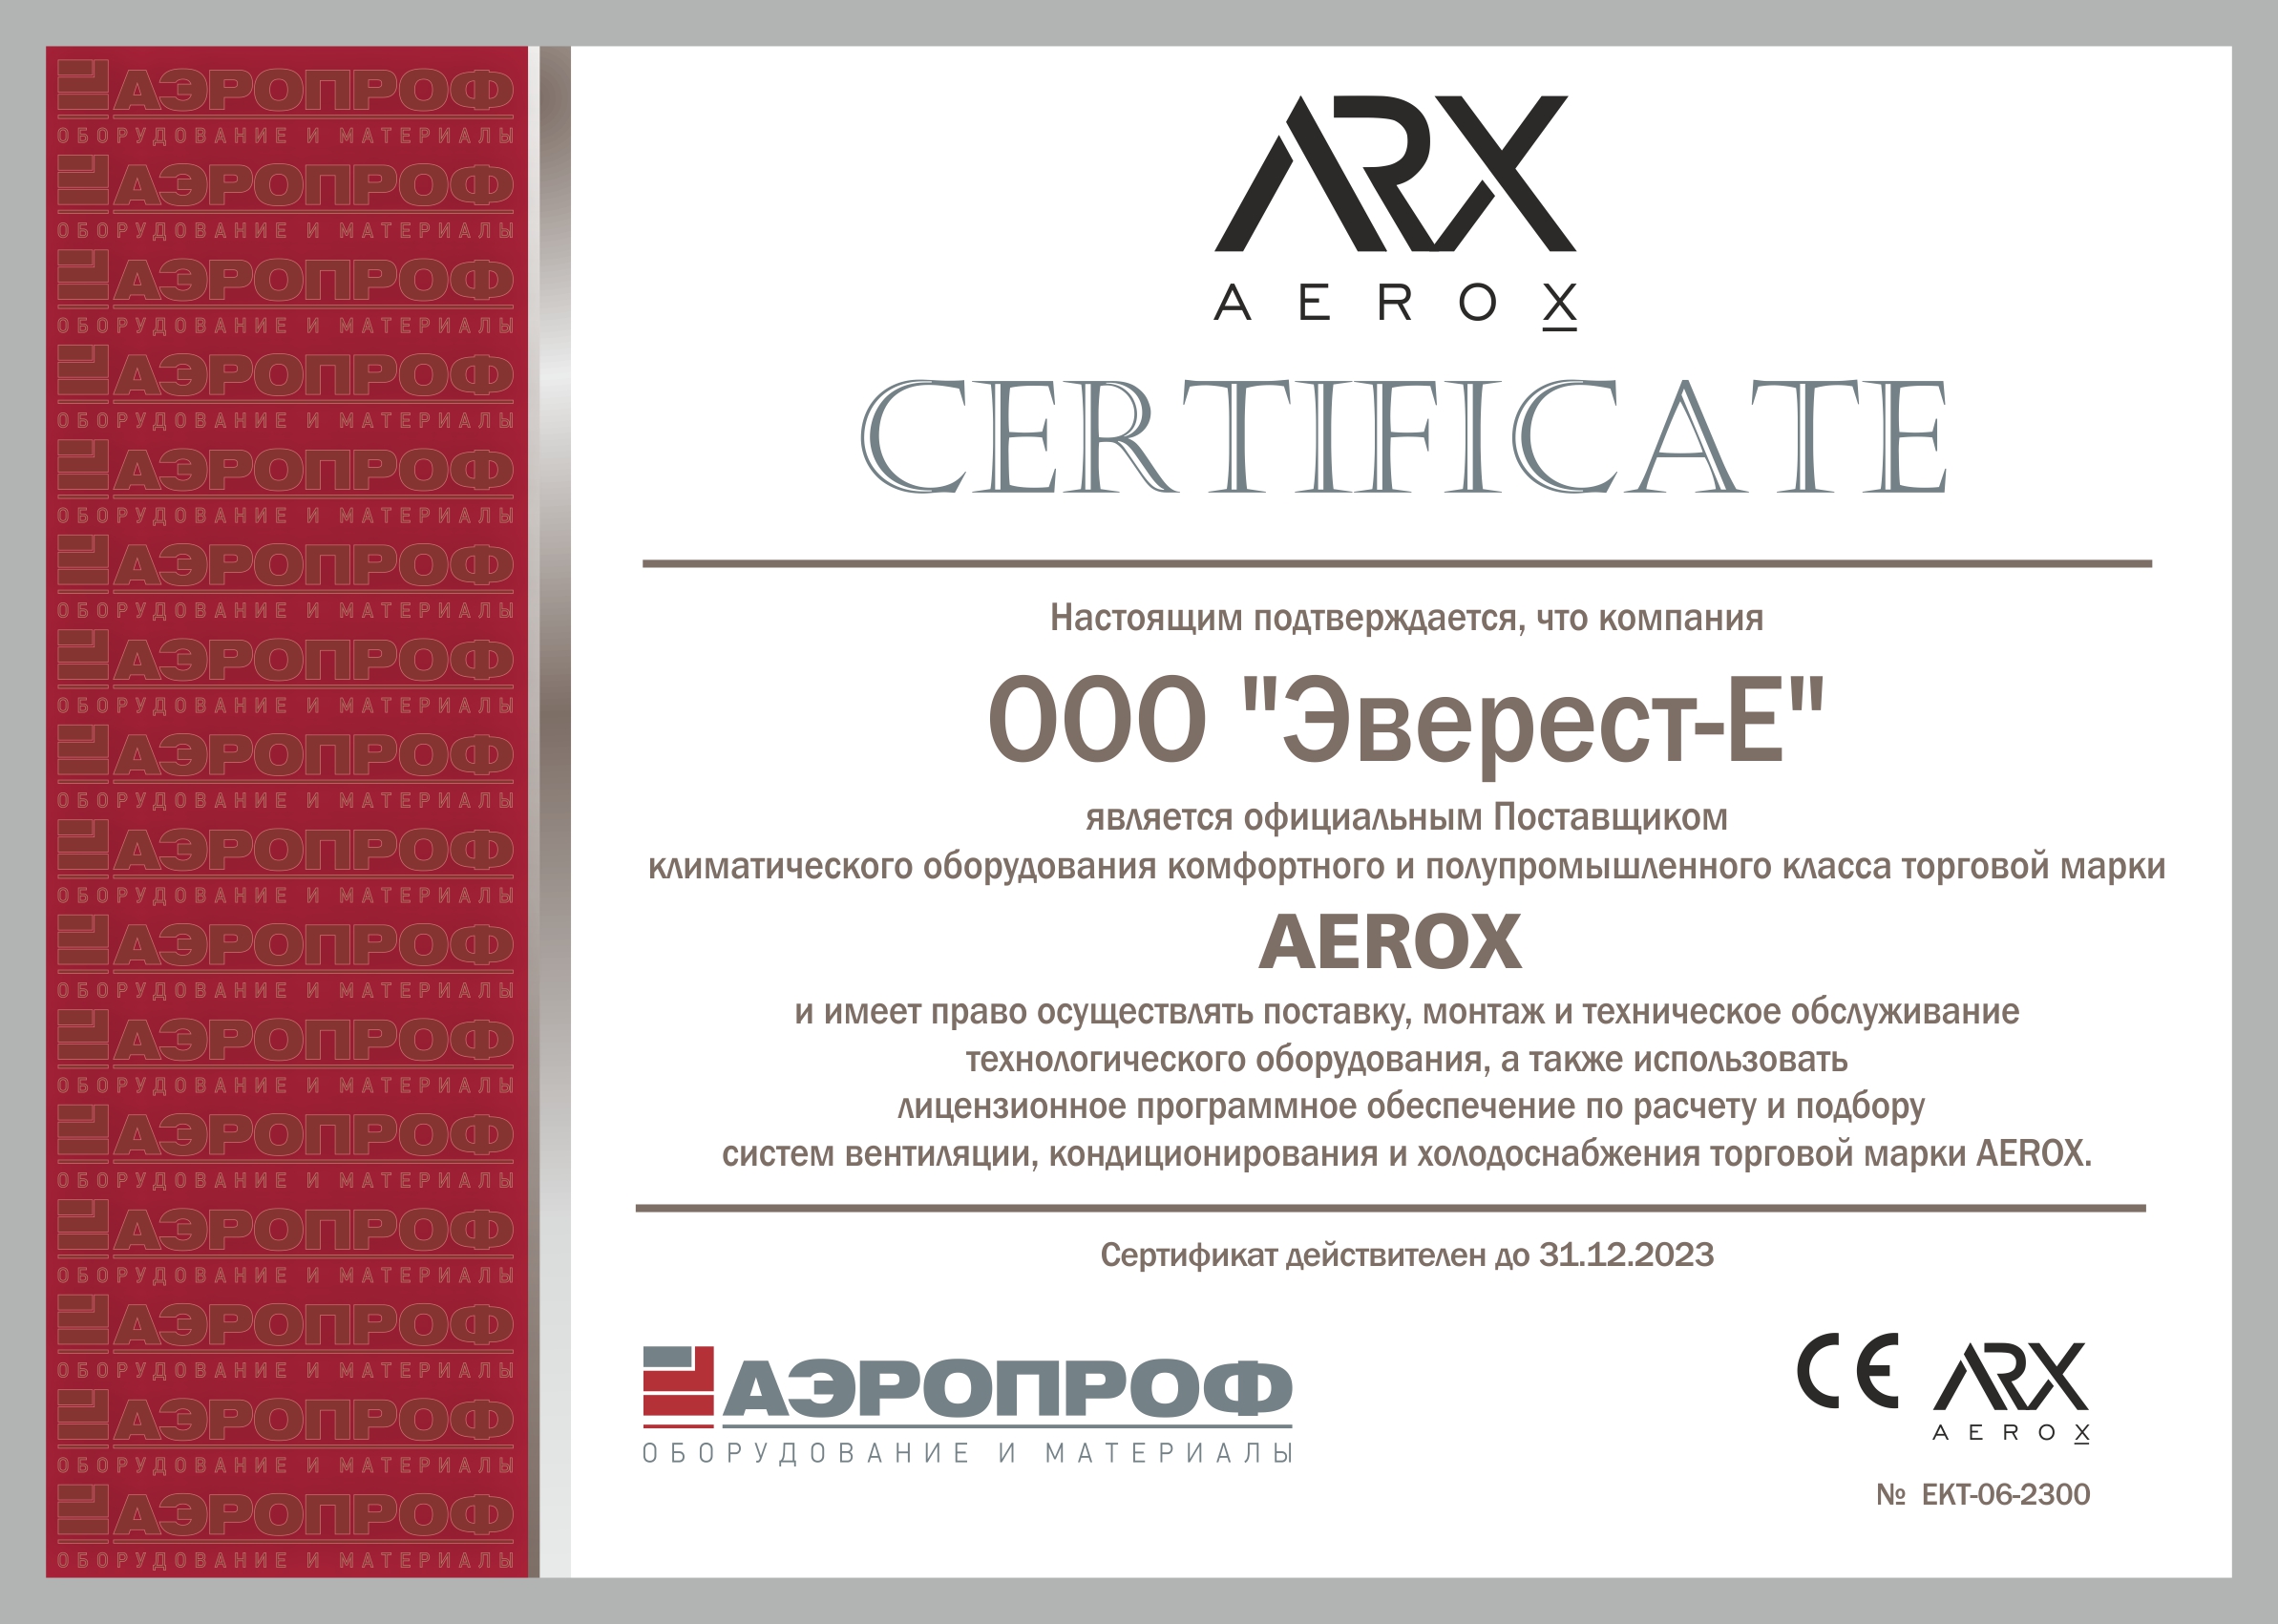 sert23-everest-arx Kondicioner Aero ALRS-36IH3A-02/ALRS-36OH3A-02 kypit v Ekaterinbyrge v internet-magazine KlimatMarket96.ry Сертификат официального дилера